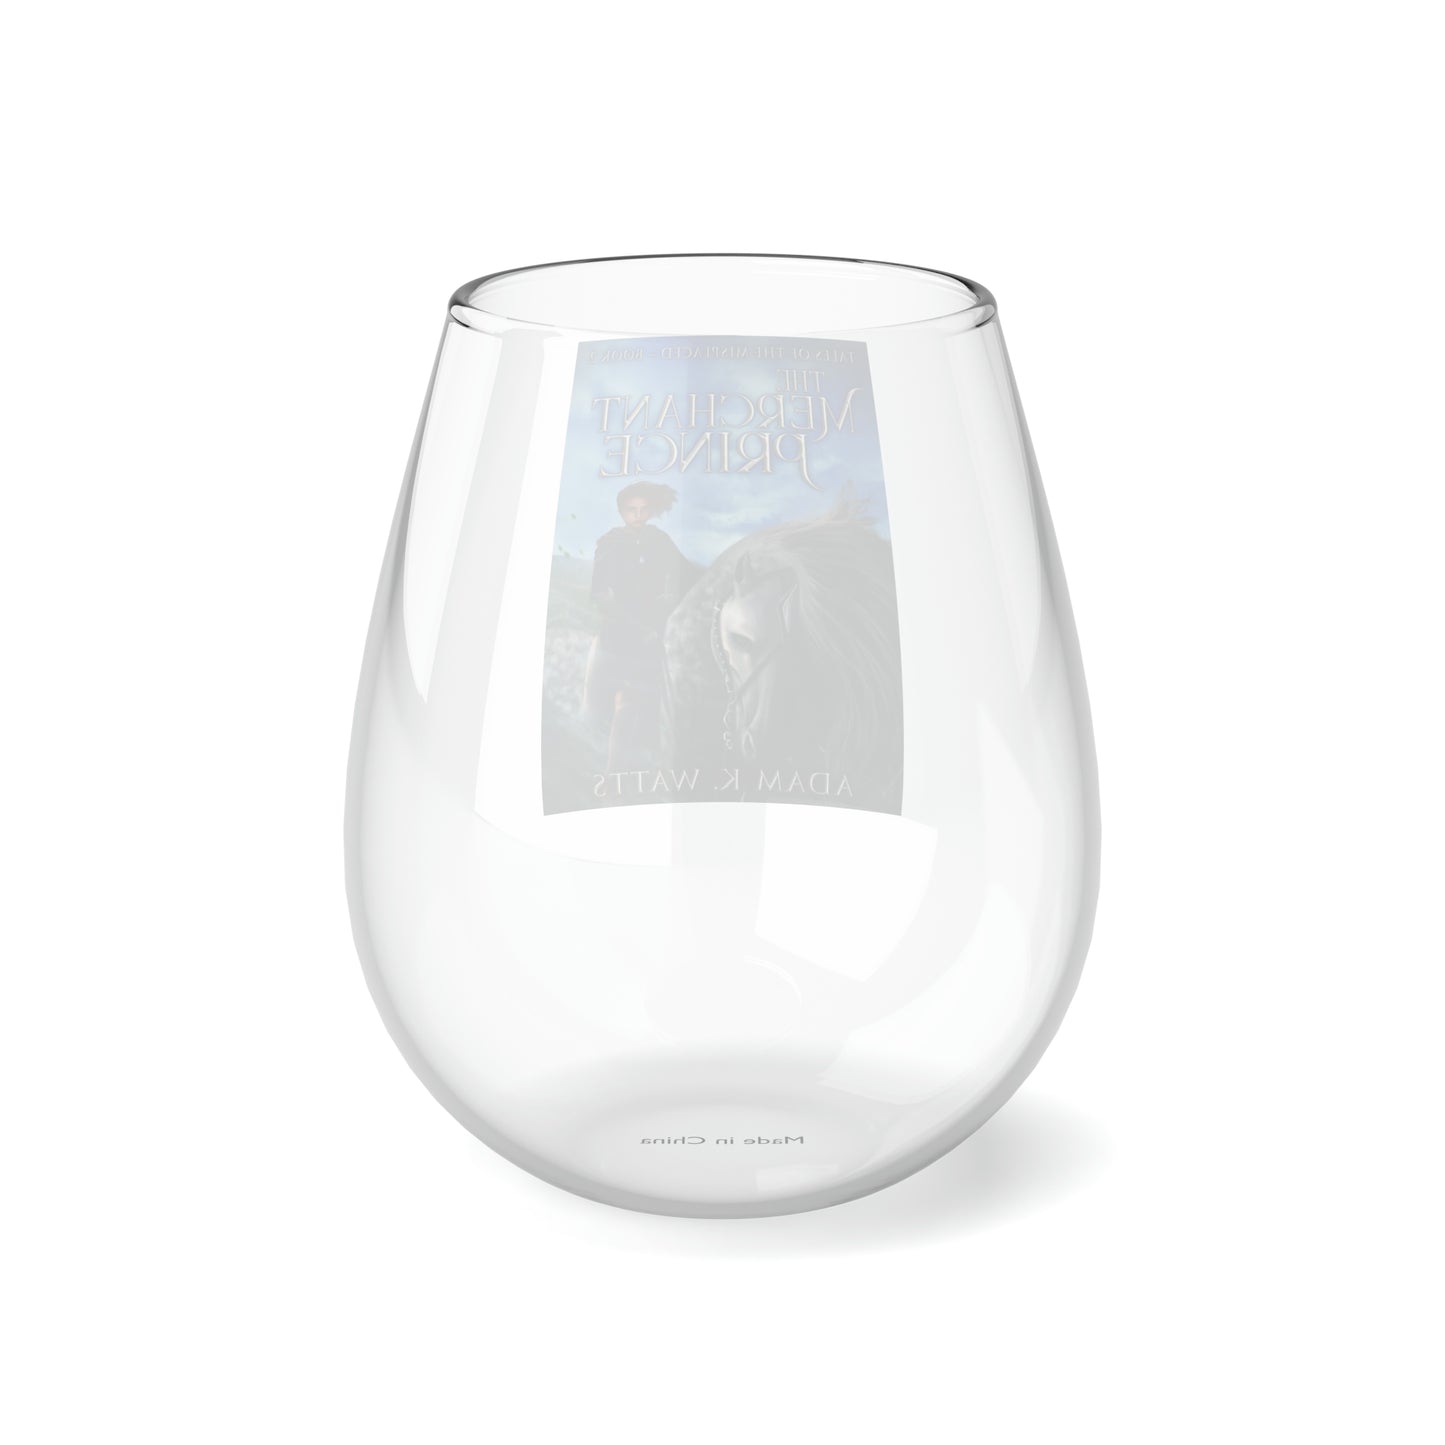 The Merchant Prince - Stemless Wine Glass, 11.75oz